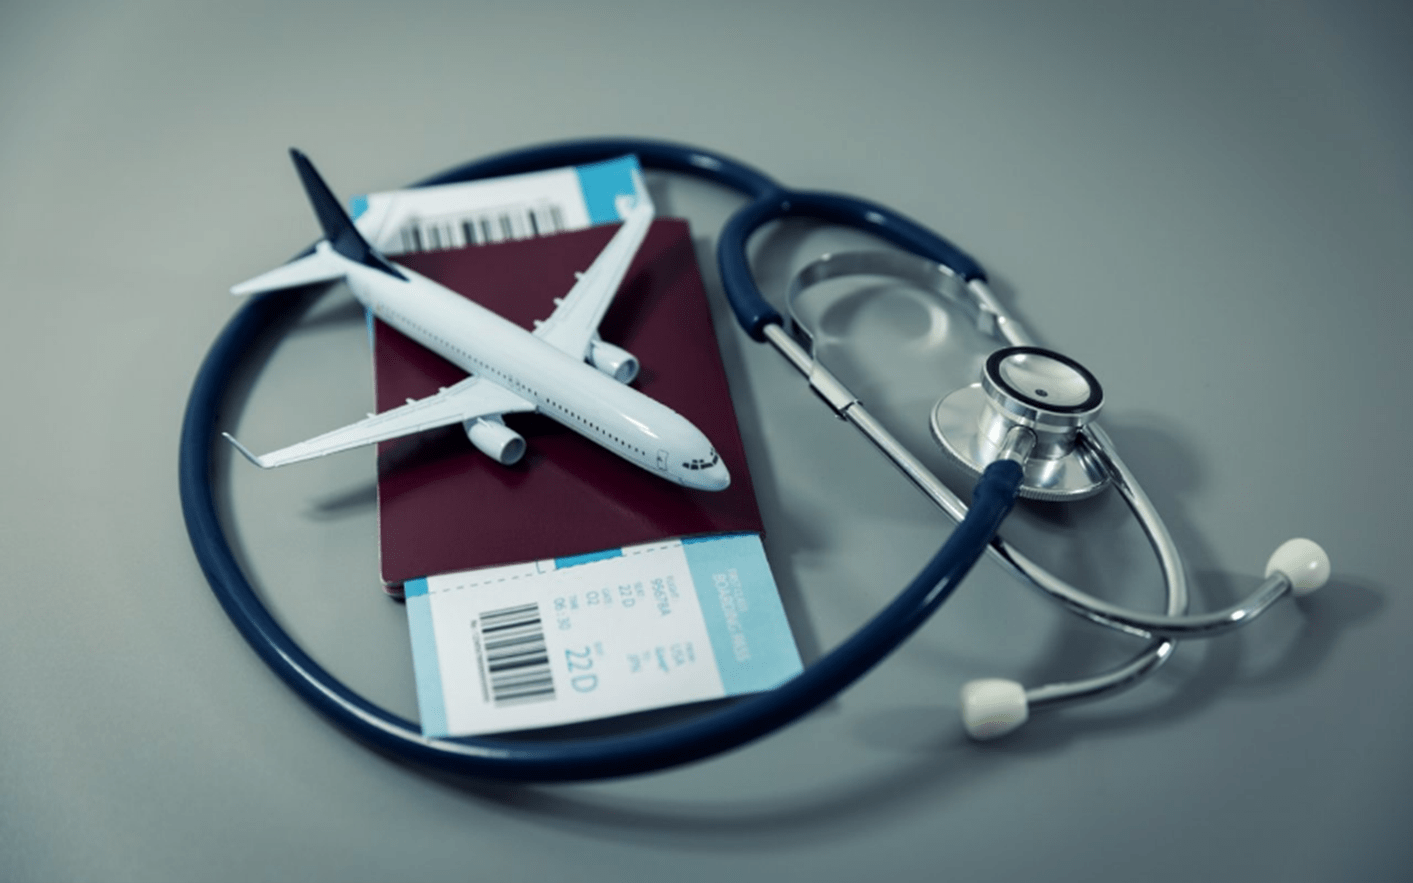 medical history travel insurance